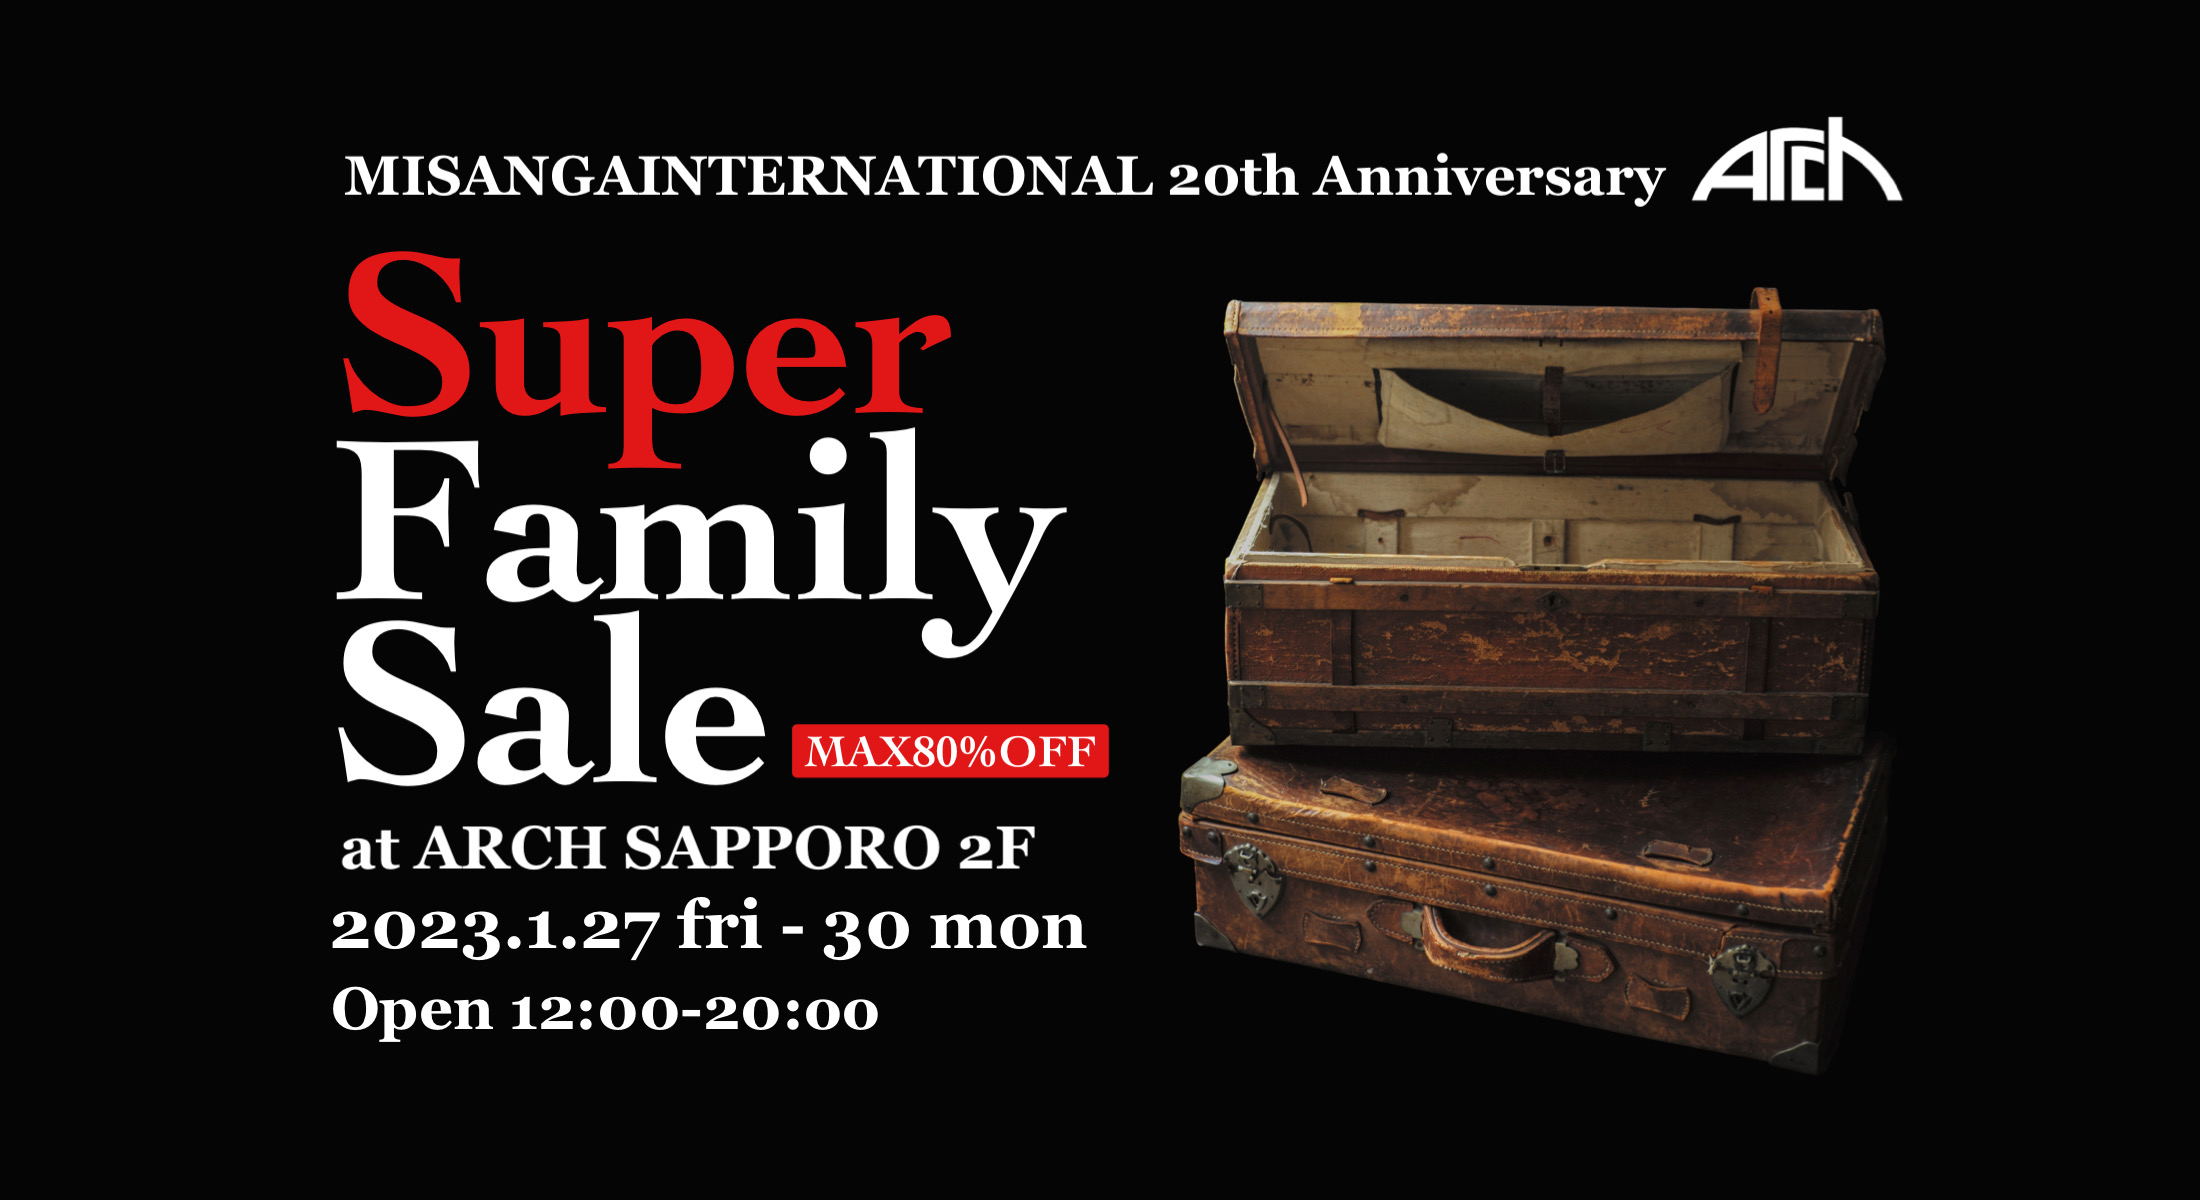 MISANGAINTERNATIONAL 20th Anniversary Super Family Sale